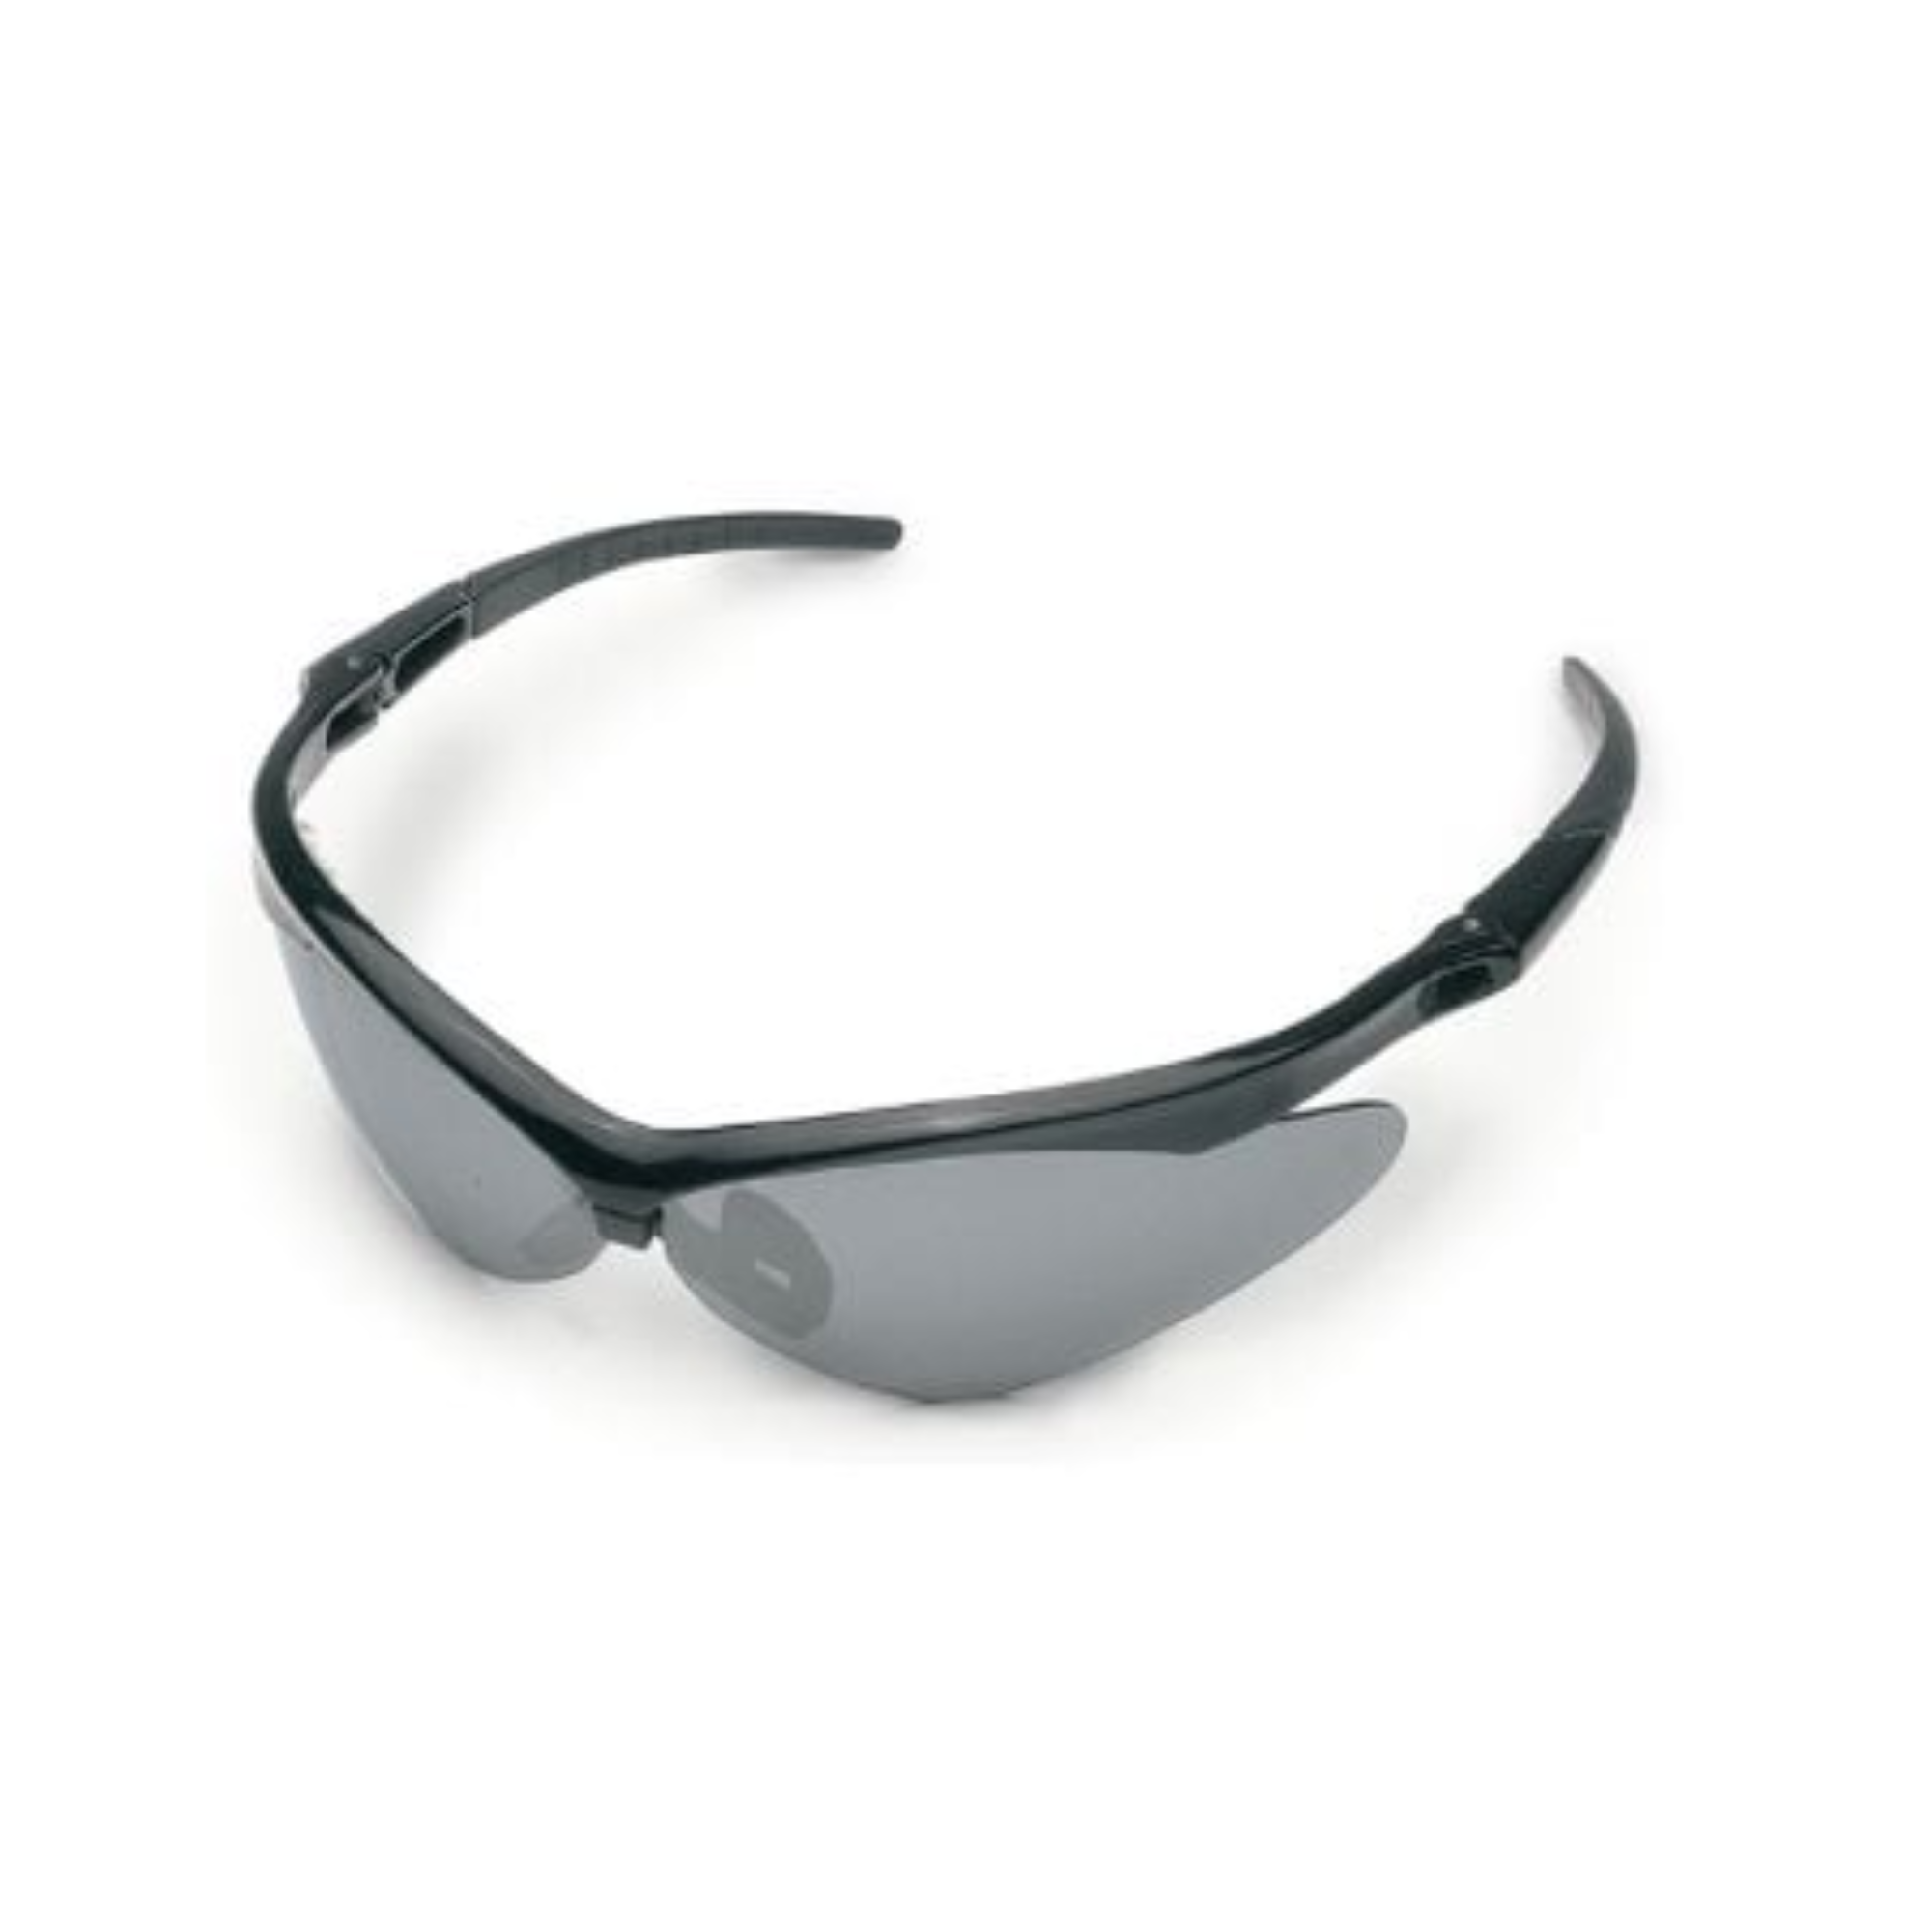 Stihl Sleek Line Glasses, Smoke Lens